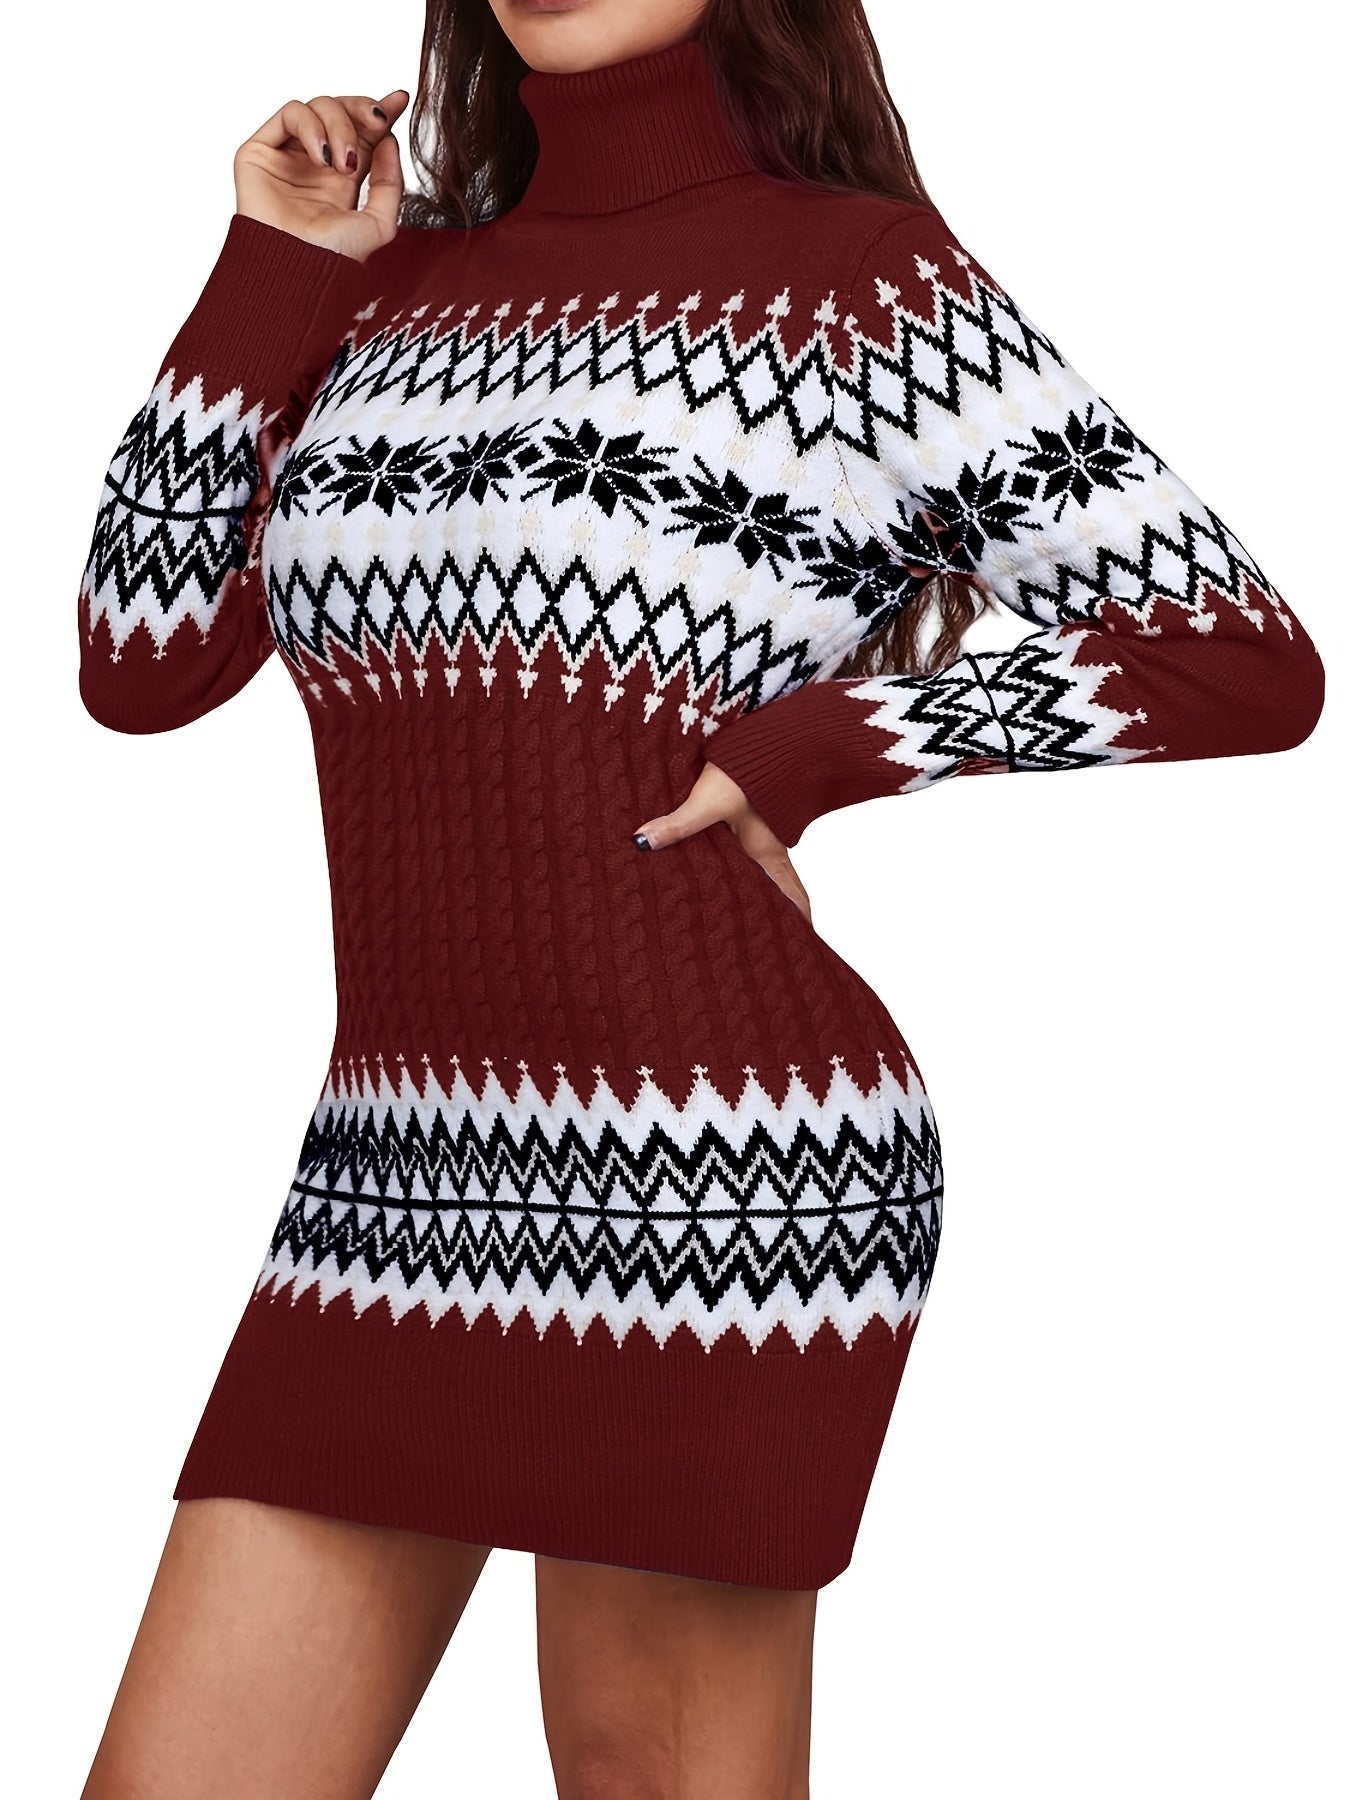 Vzyzv Christmas Turtleneck Sweater Dress, Long Sleeve Sweater Dress, Casual Sweater Dress For Fall & Winter, Women's Clothing